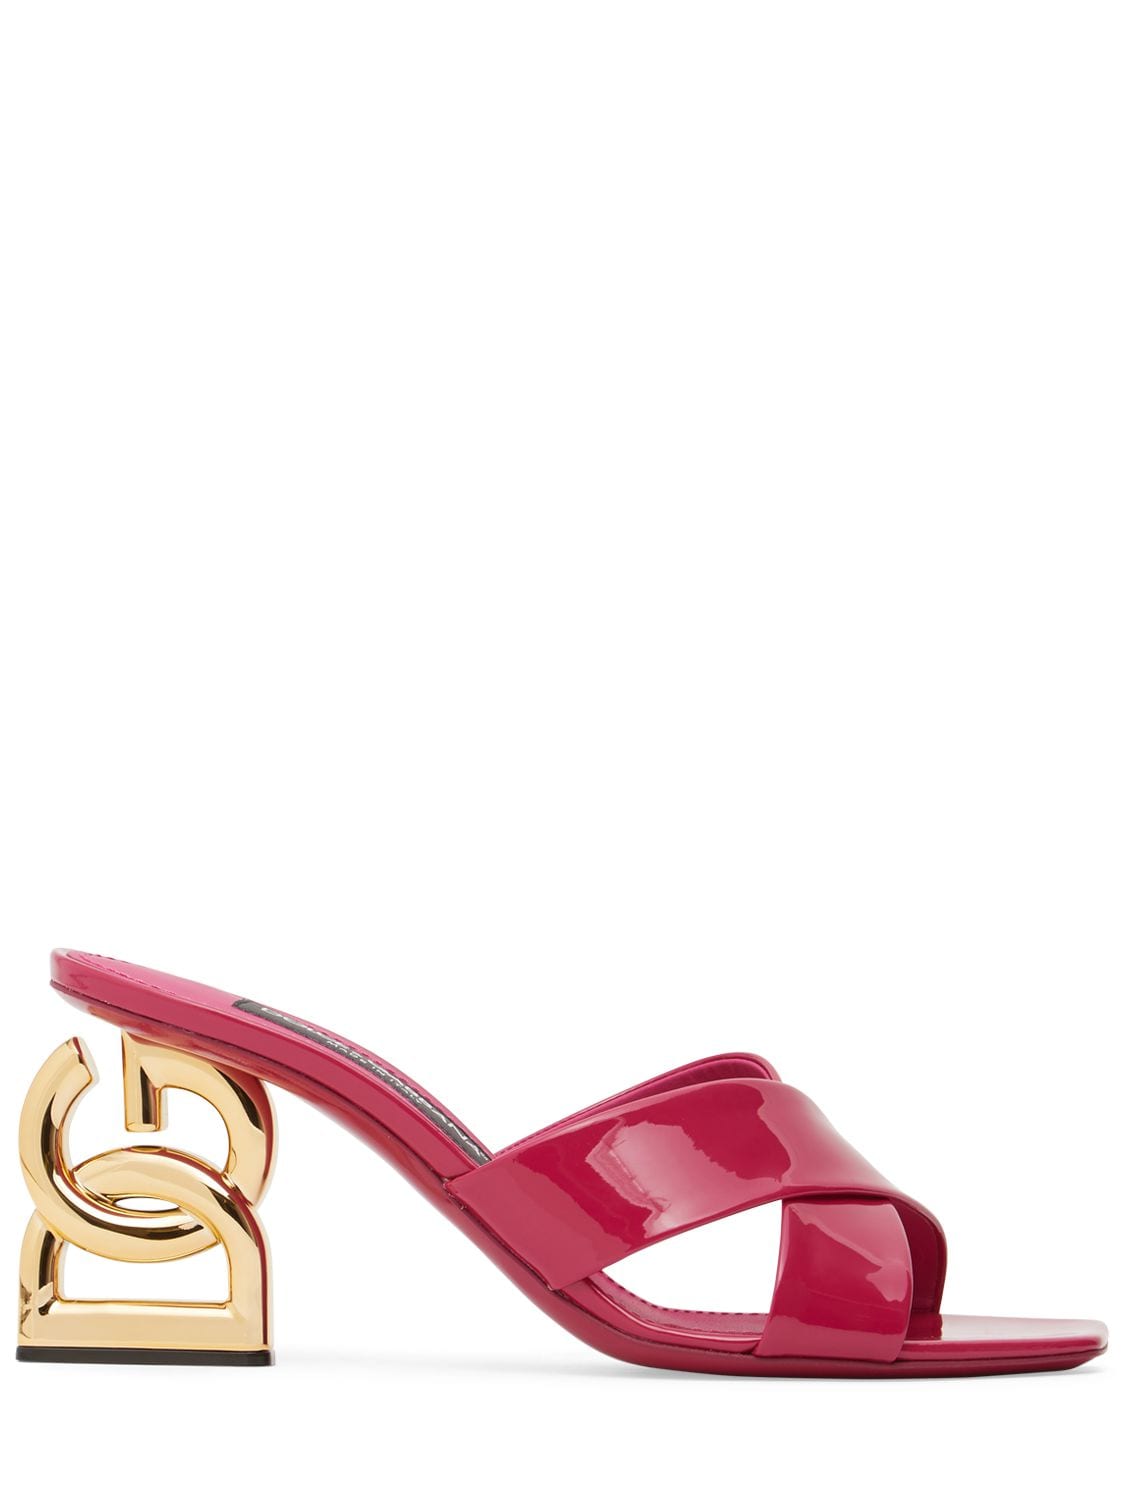 Dolce & Gabbana 75mm Patent Leather Mules Sandals In Fuchsia